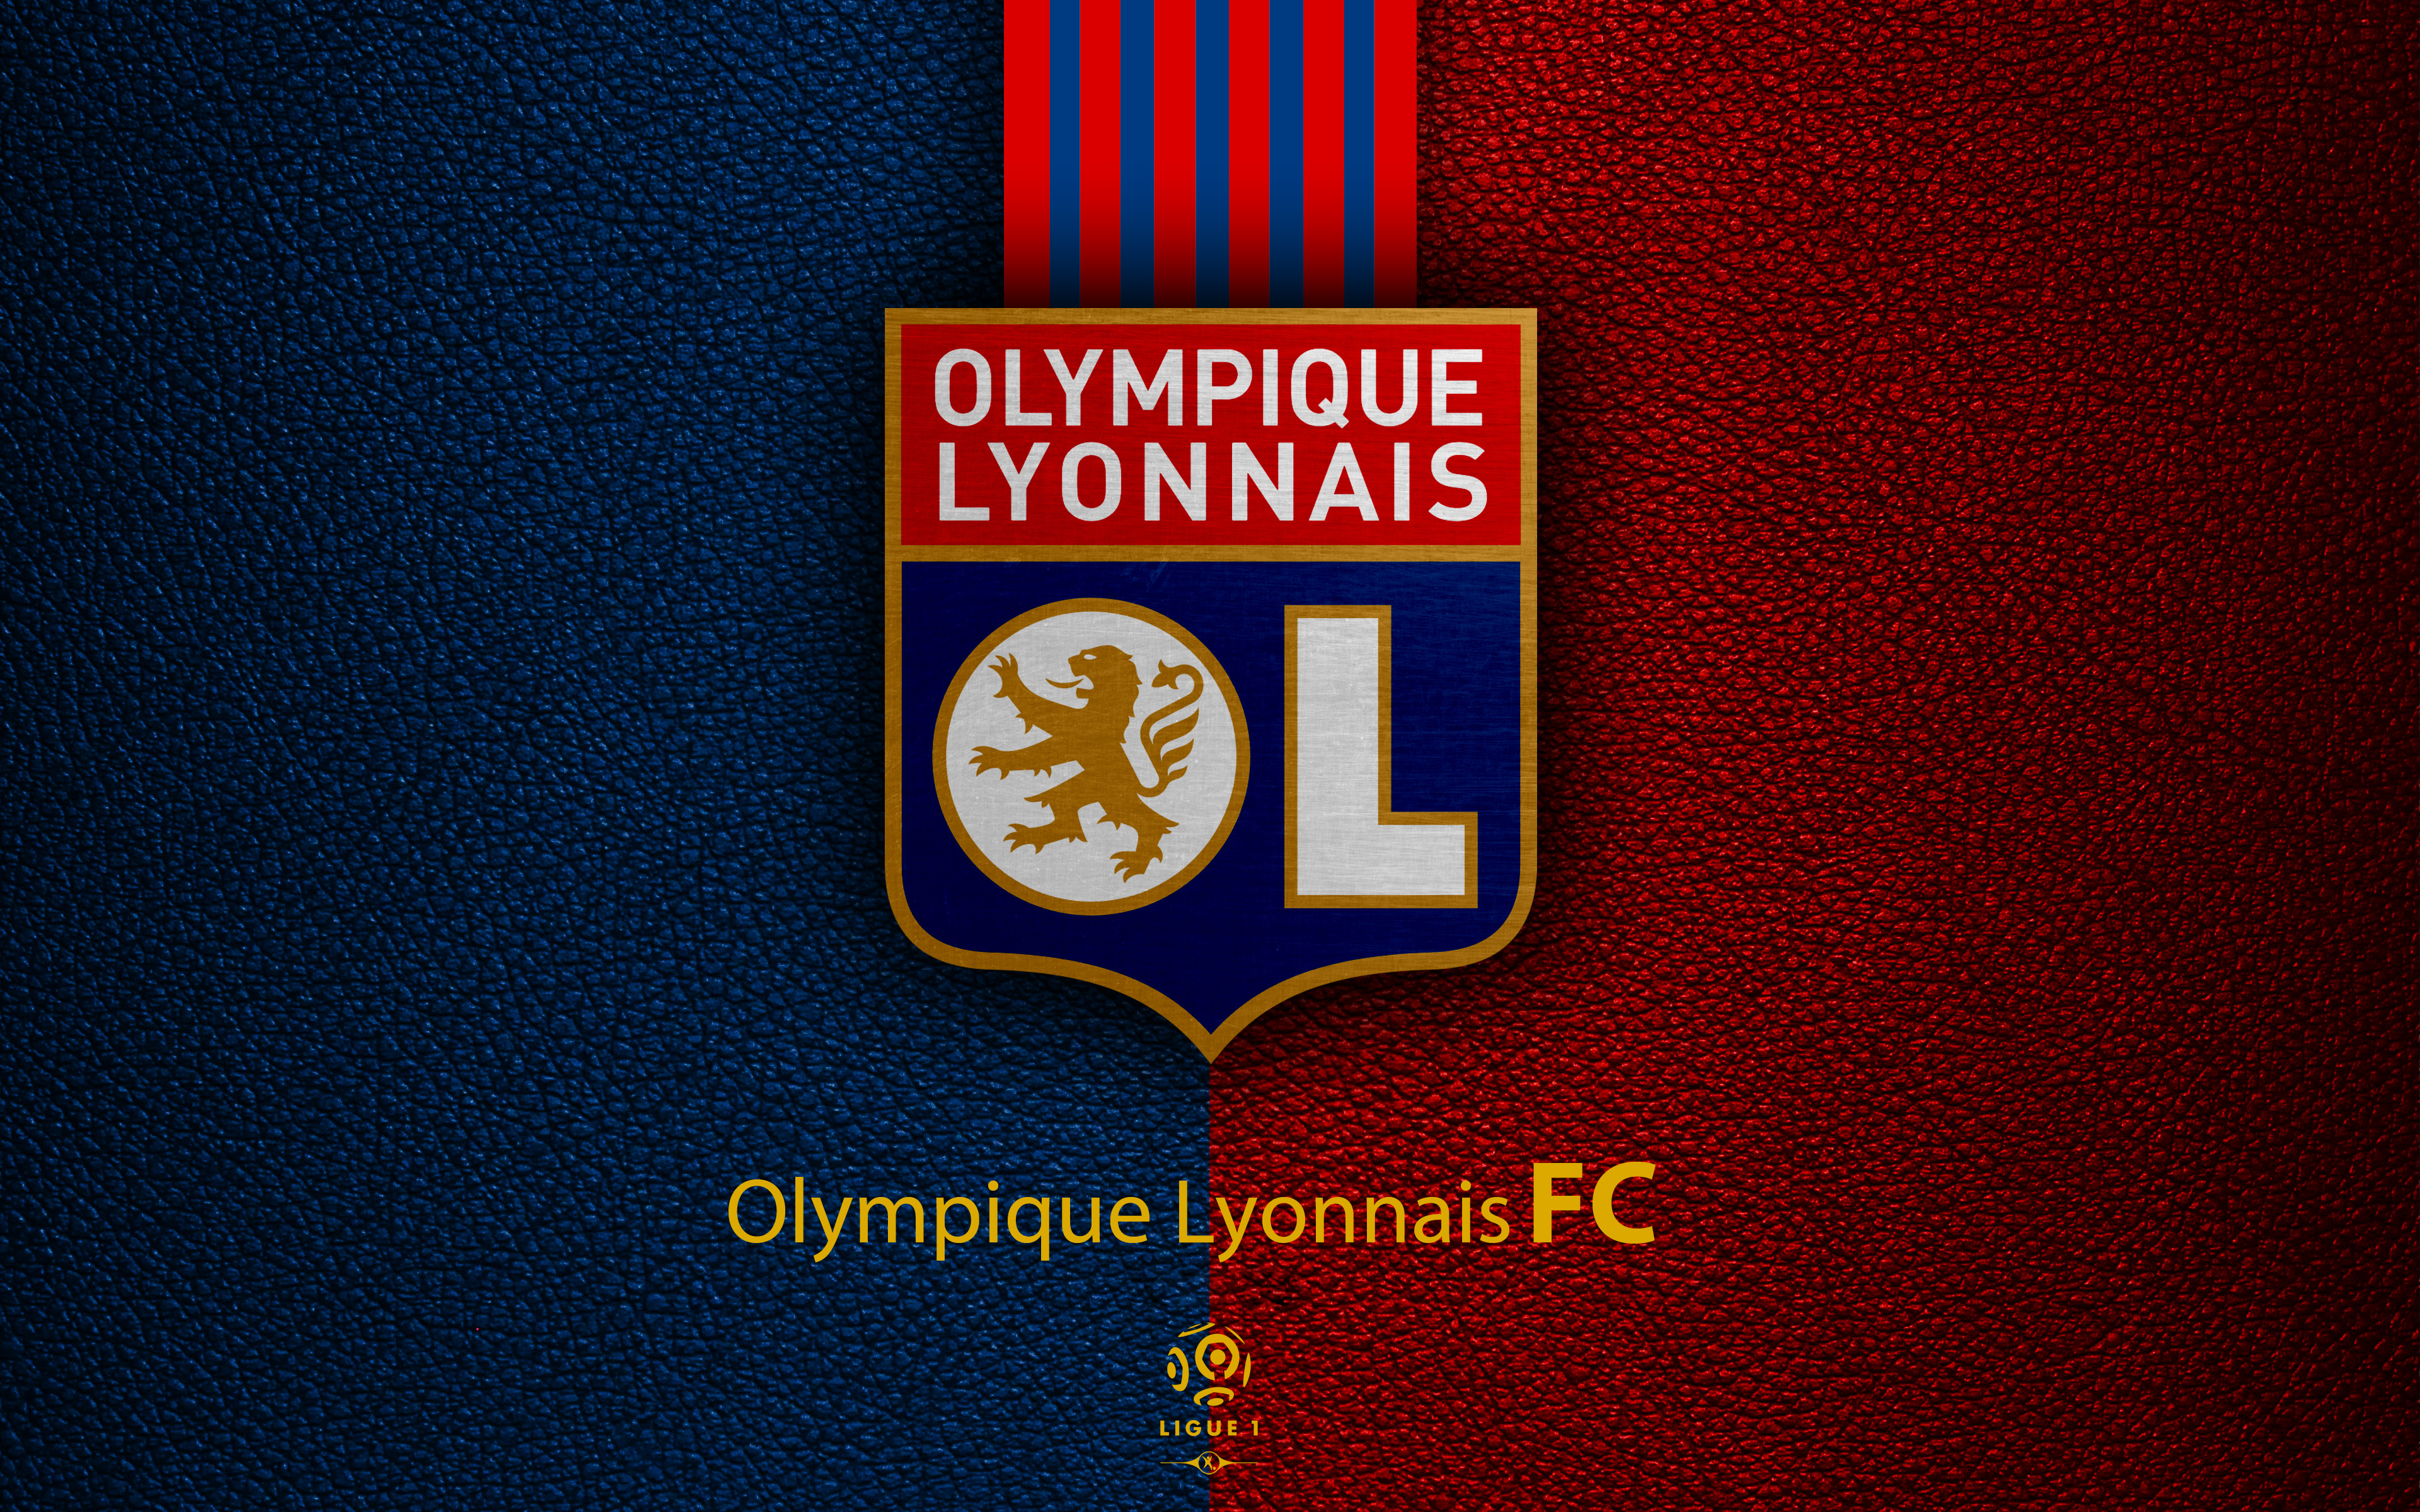 [36+] Olympique Lyonnais Wallpapers | WallpaperSafari